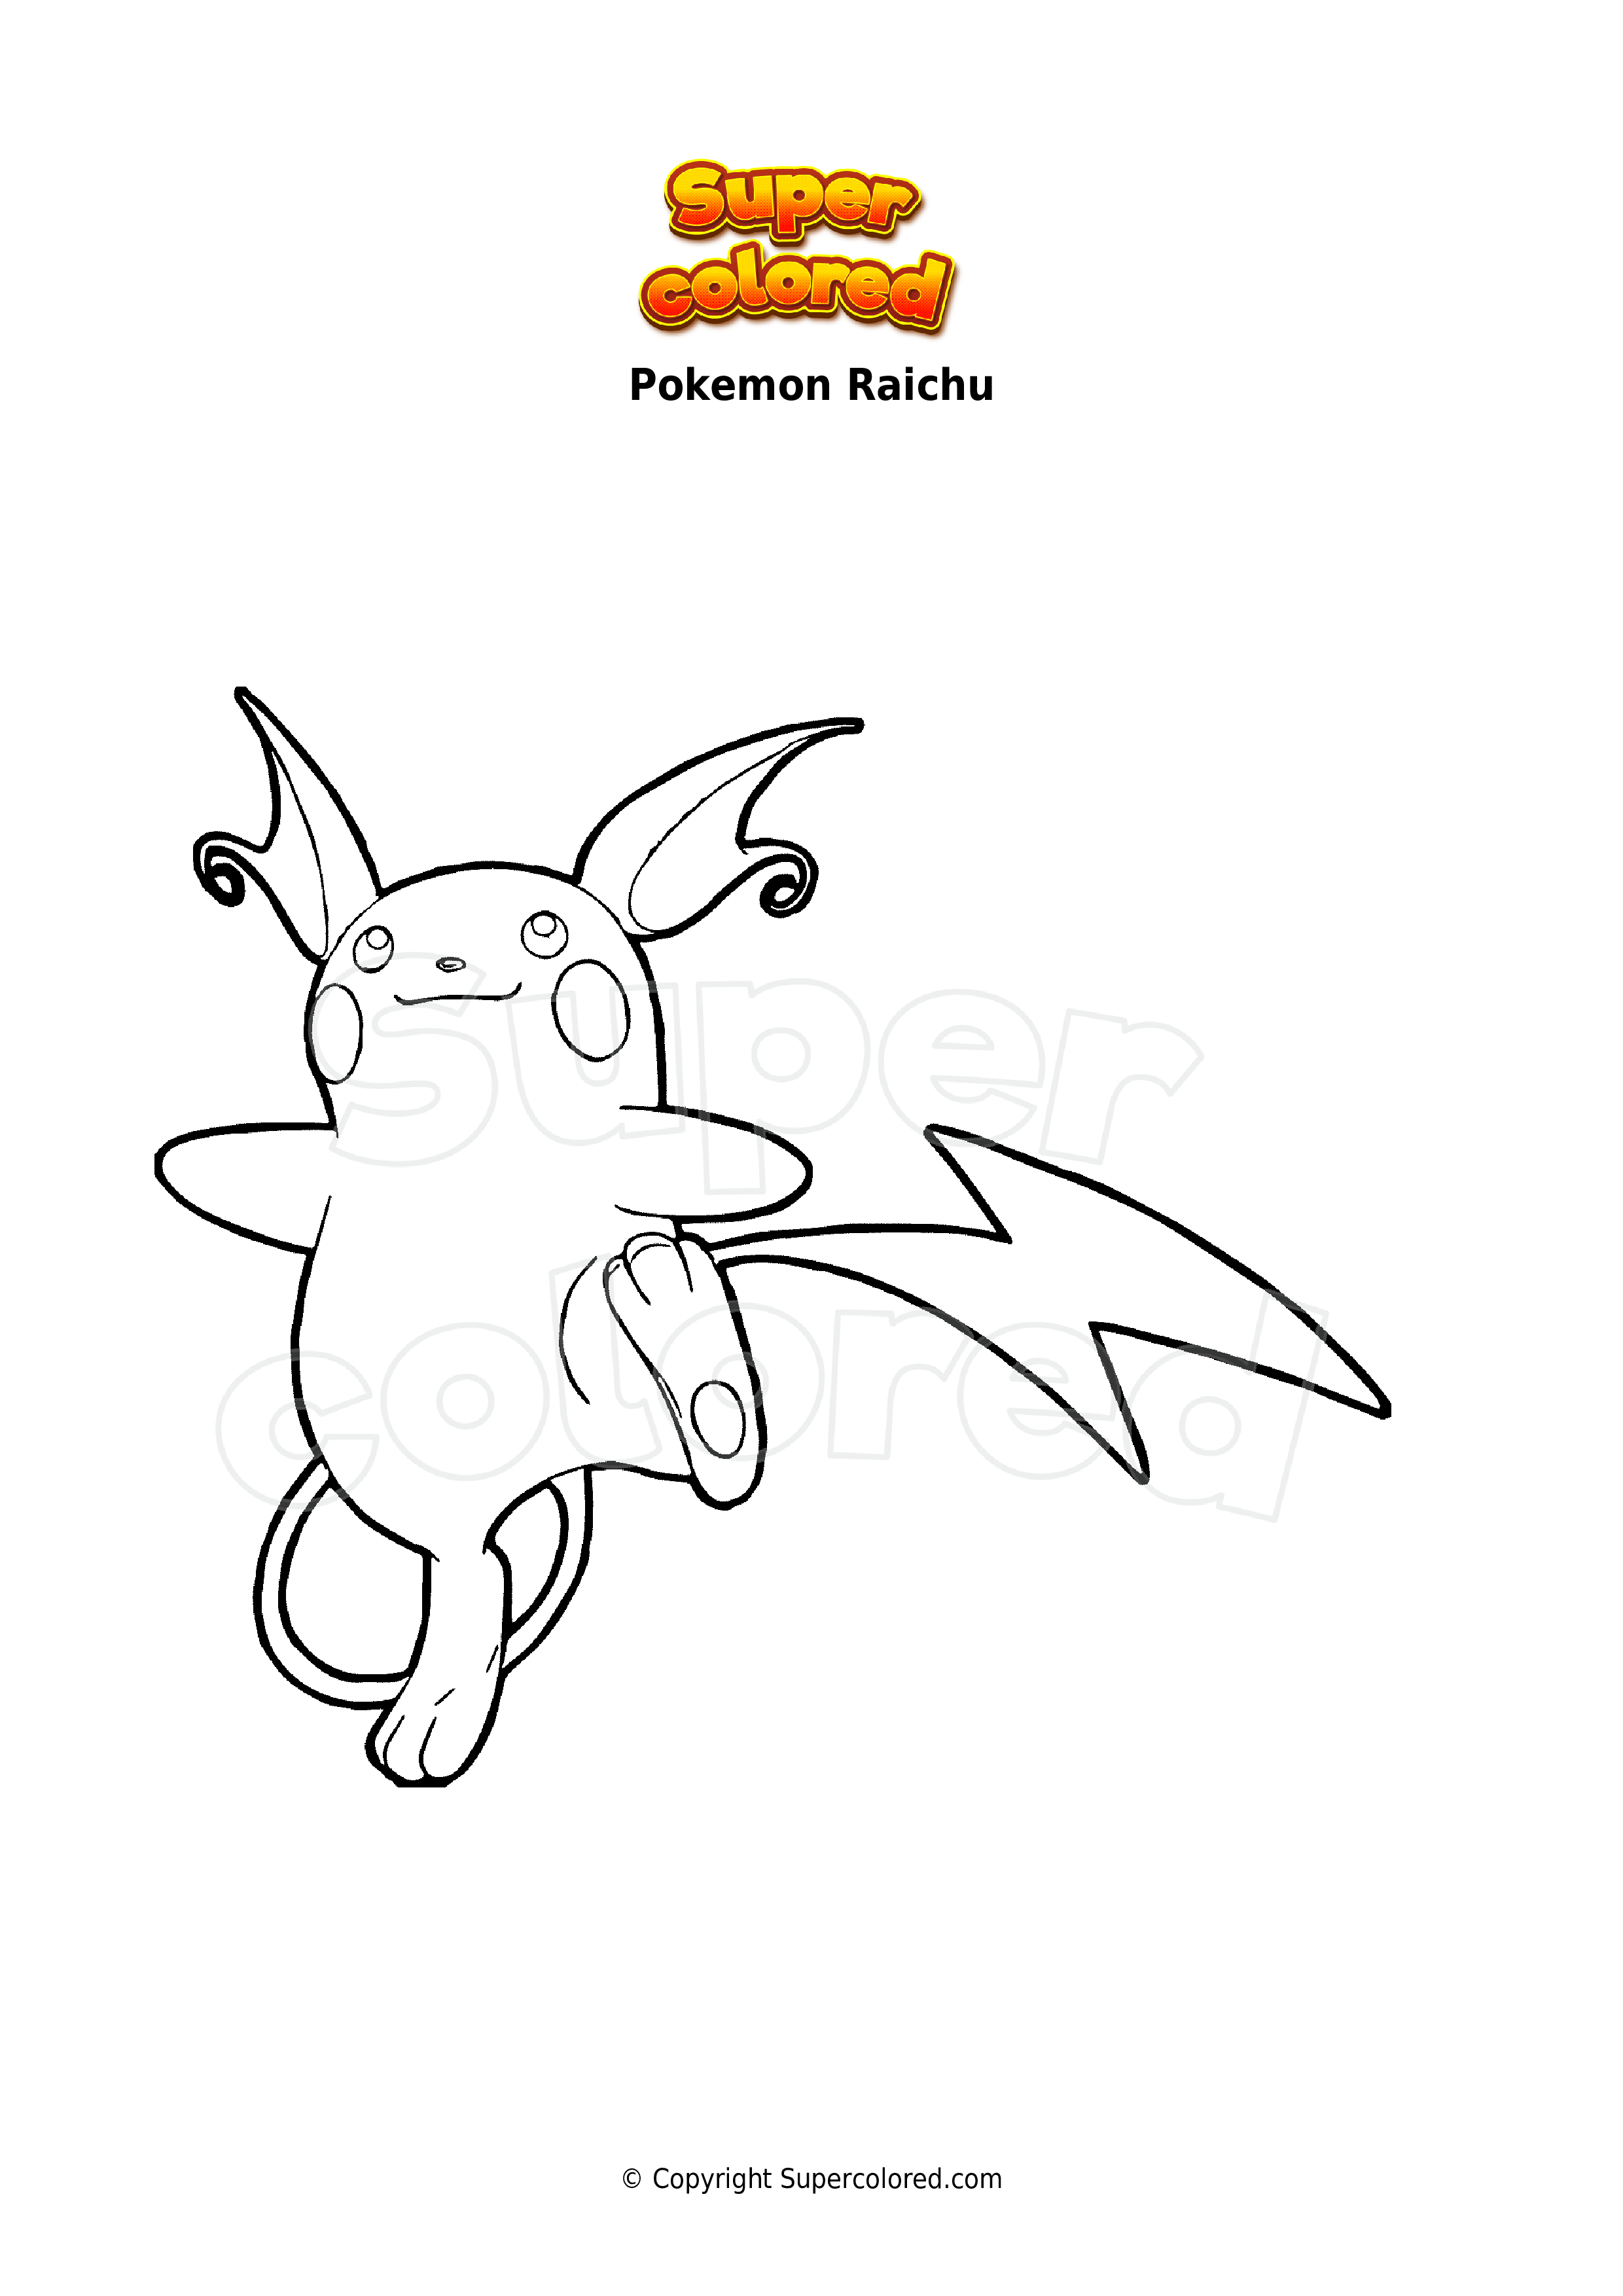 Raichu Pokemon Coloring Page